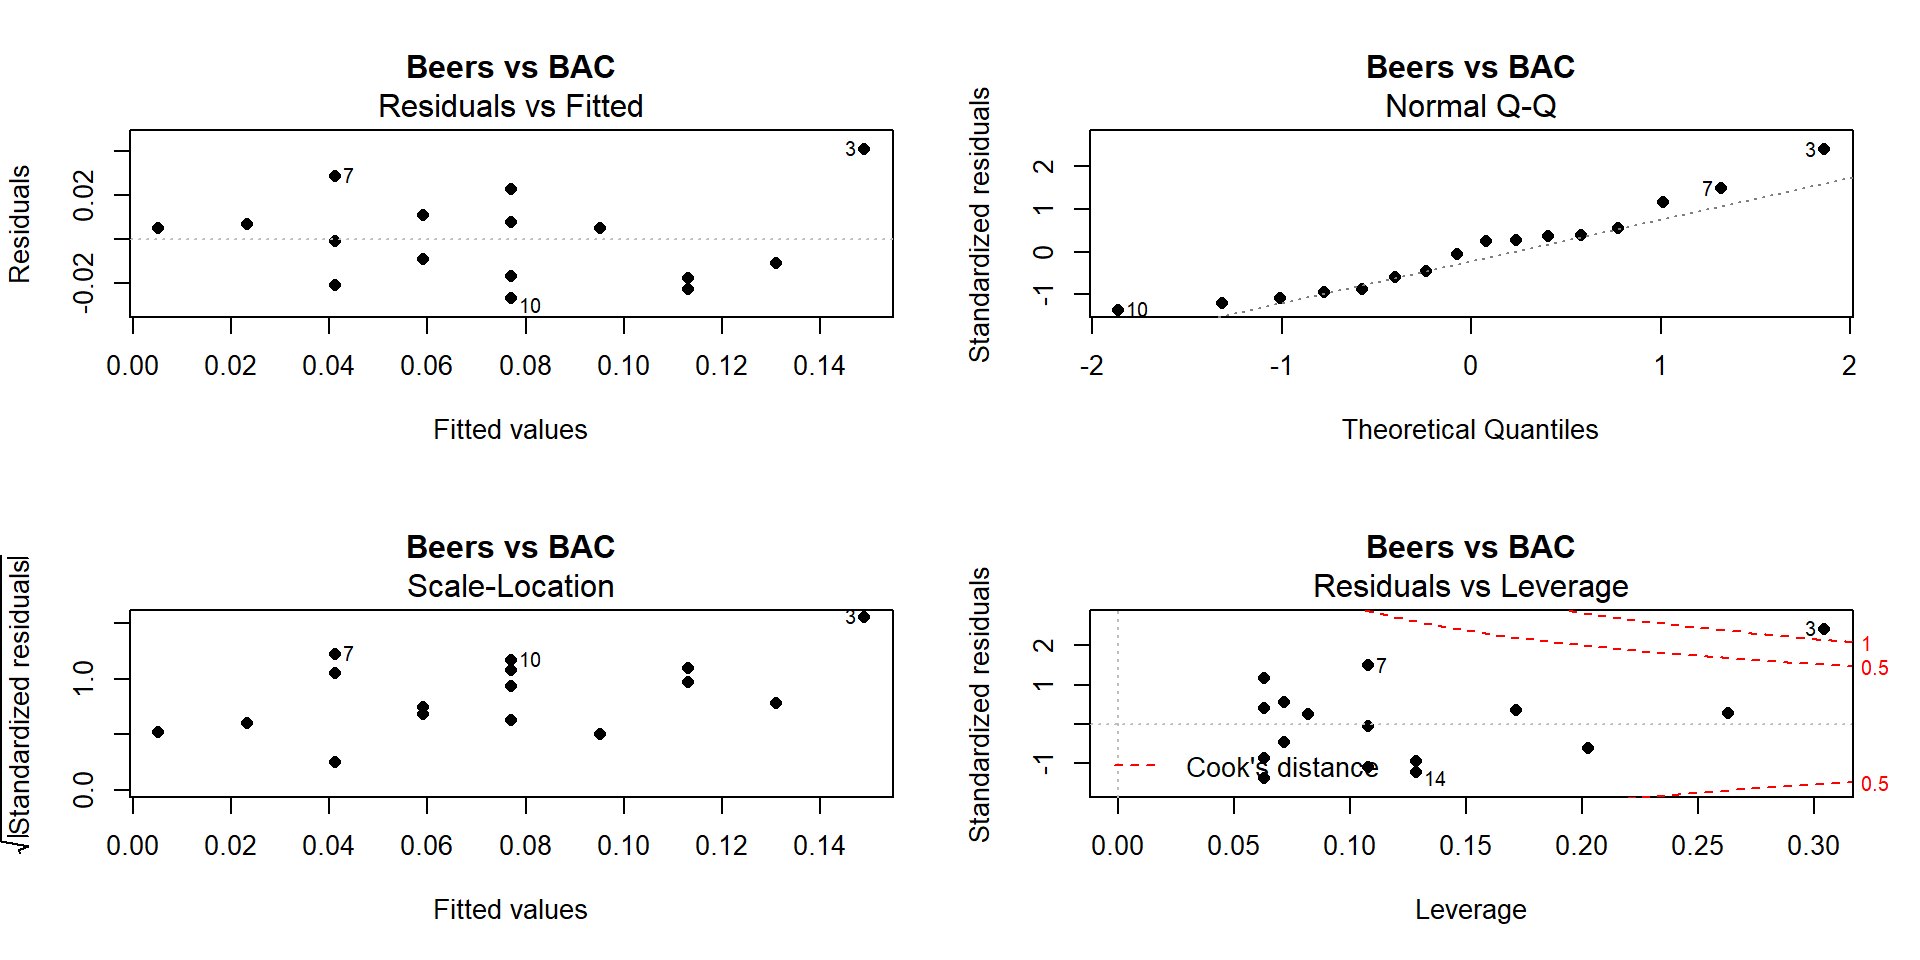 Full suite of diagnostics plots for *Beer* vs *BAC* data.